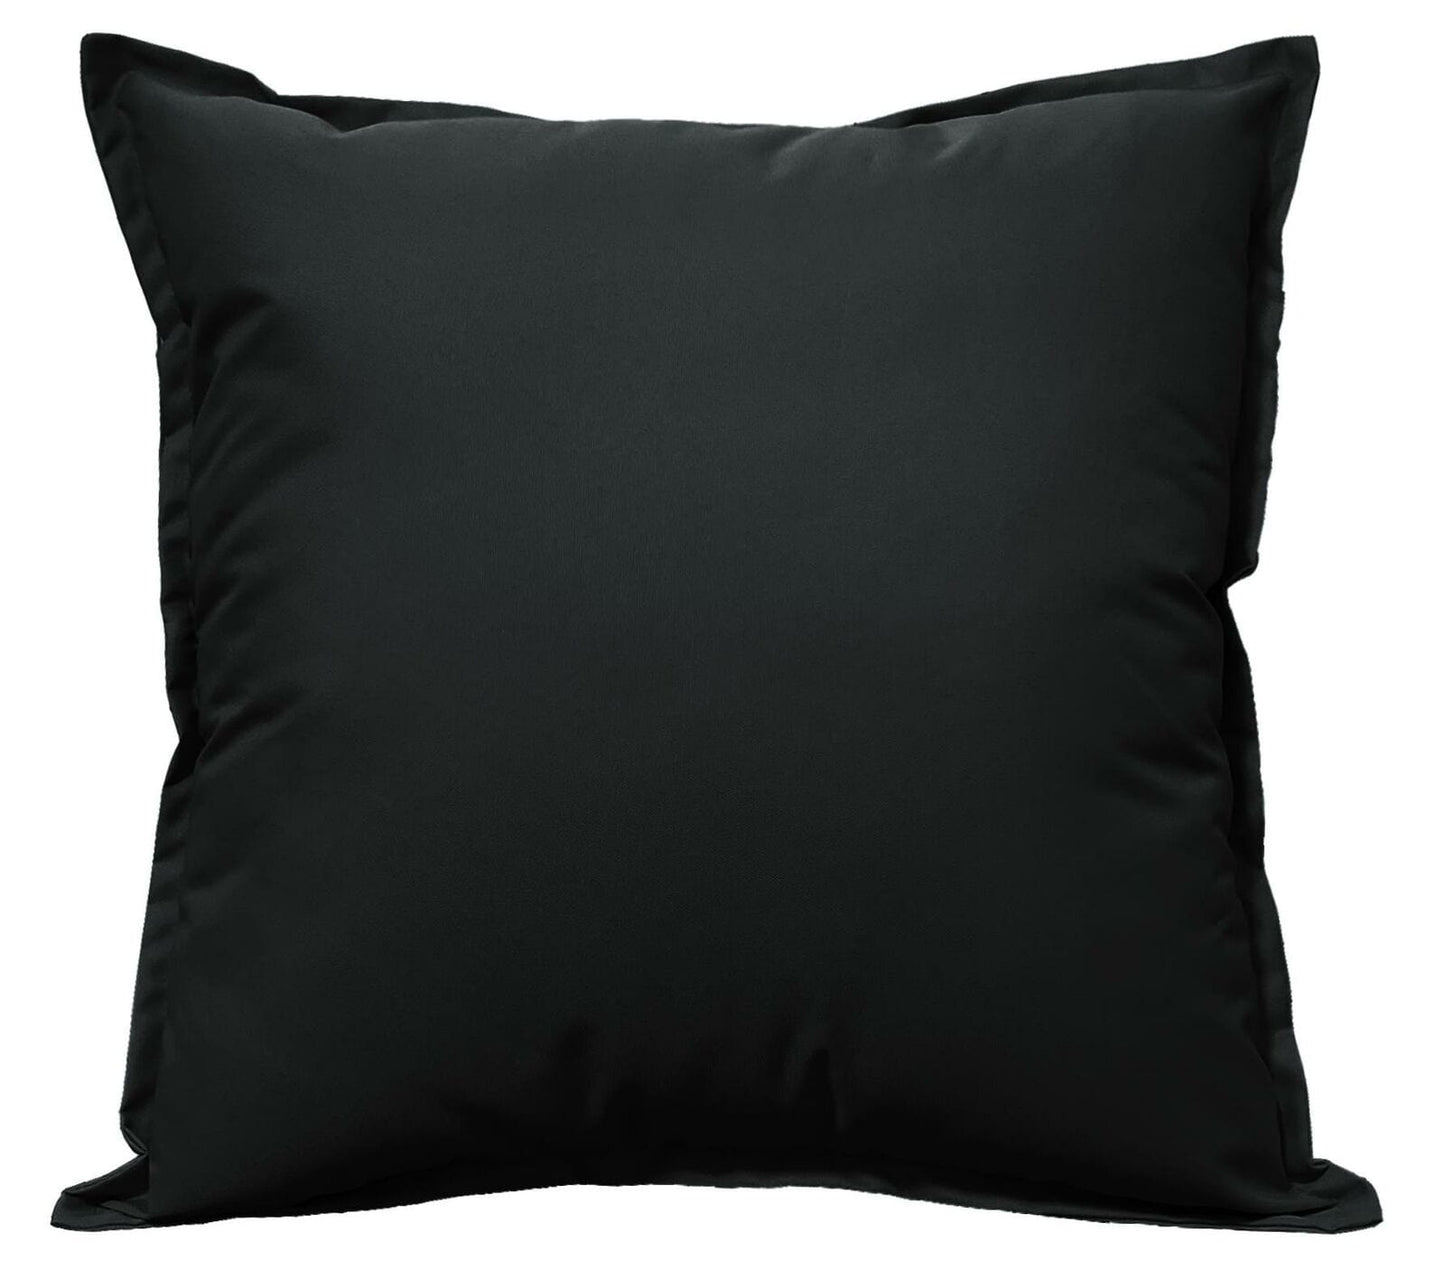 Outdoor Waterproof Cushions BLACK / 43 x 43 cm OLIVIA ROCCO Cushions